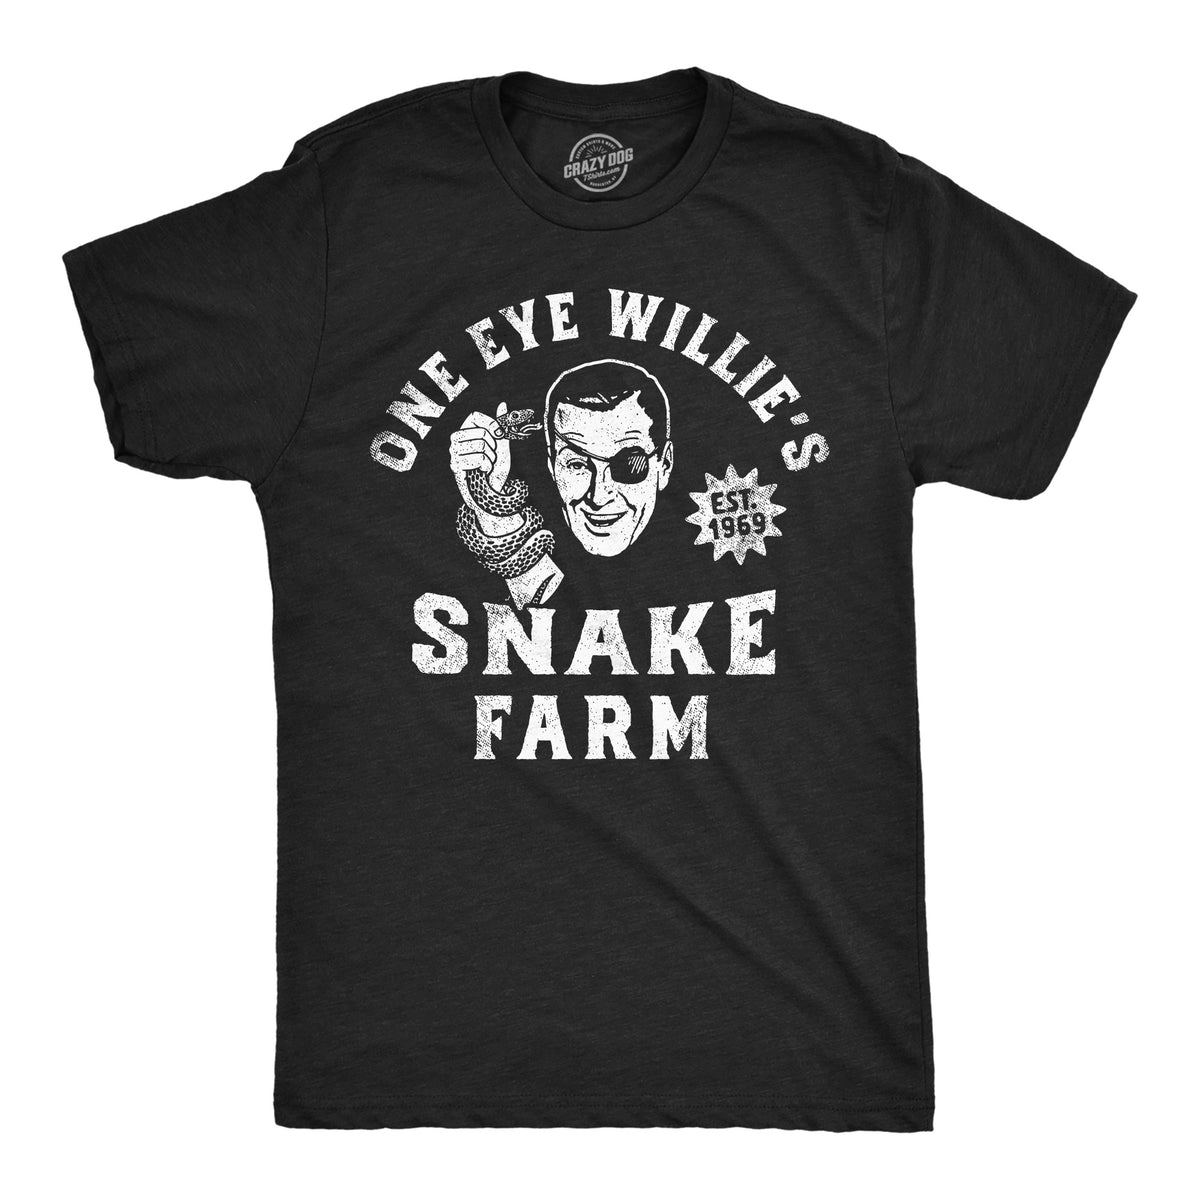 Funny Heather Black - One Eye Willies Snake Farm One Eye Willies Snake Farm Mens T Shirt Nerdy Sarcastic animal Tee